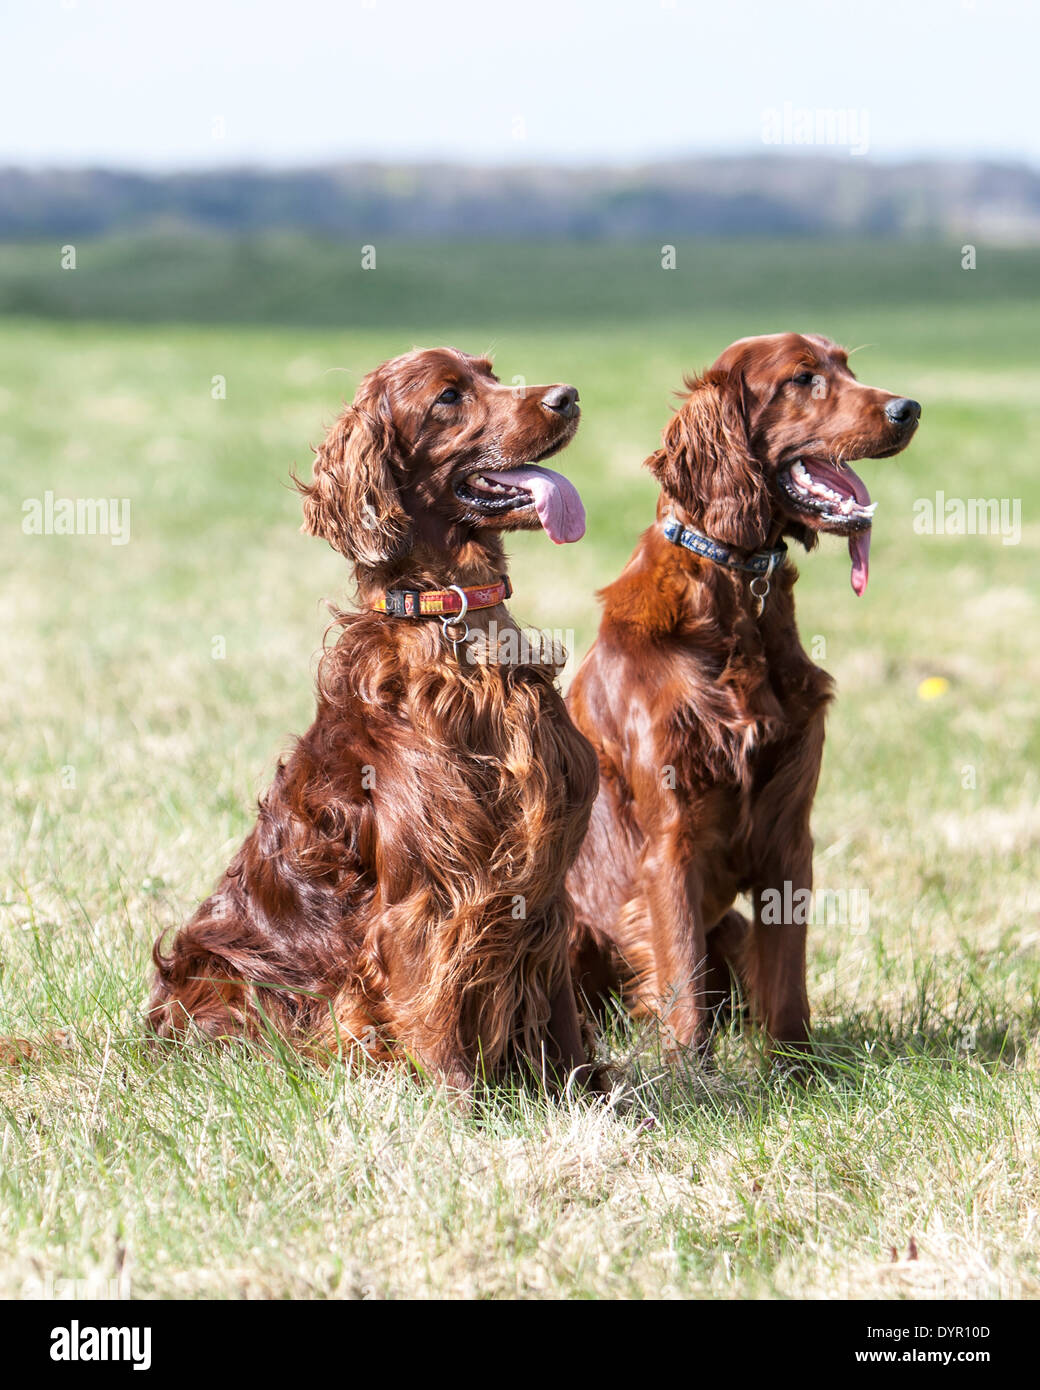 Two Irish Setter dogs sitting in field Stock Photo